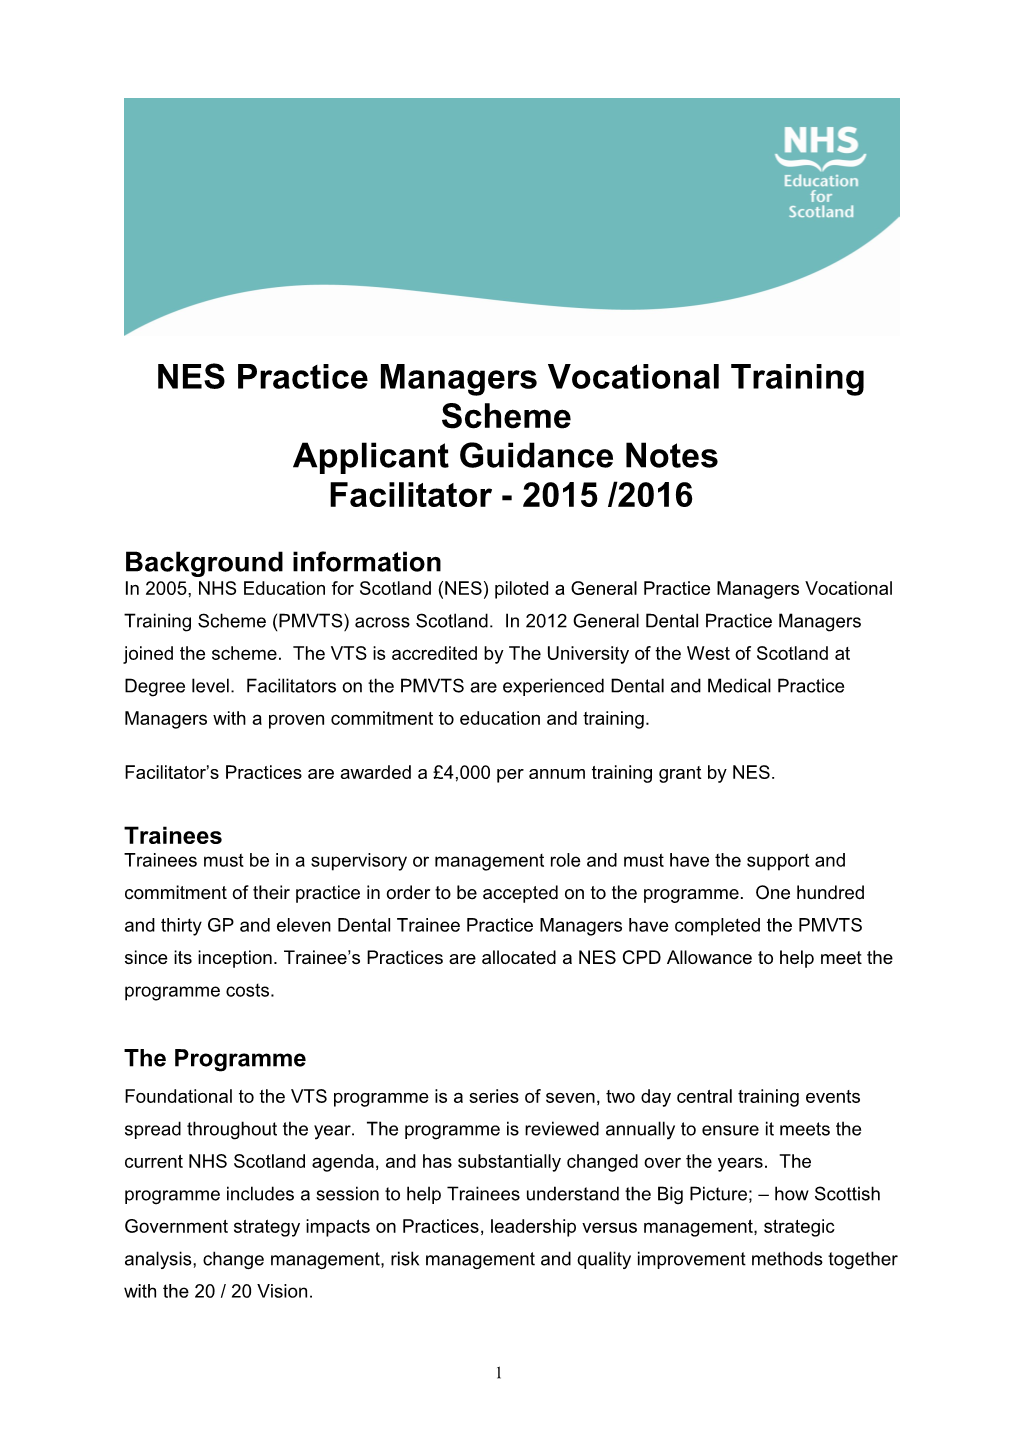 NES Practice Managers Vocational Training Scheme